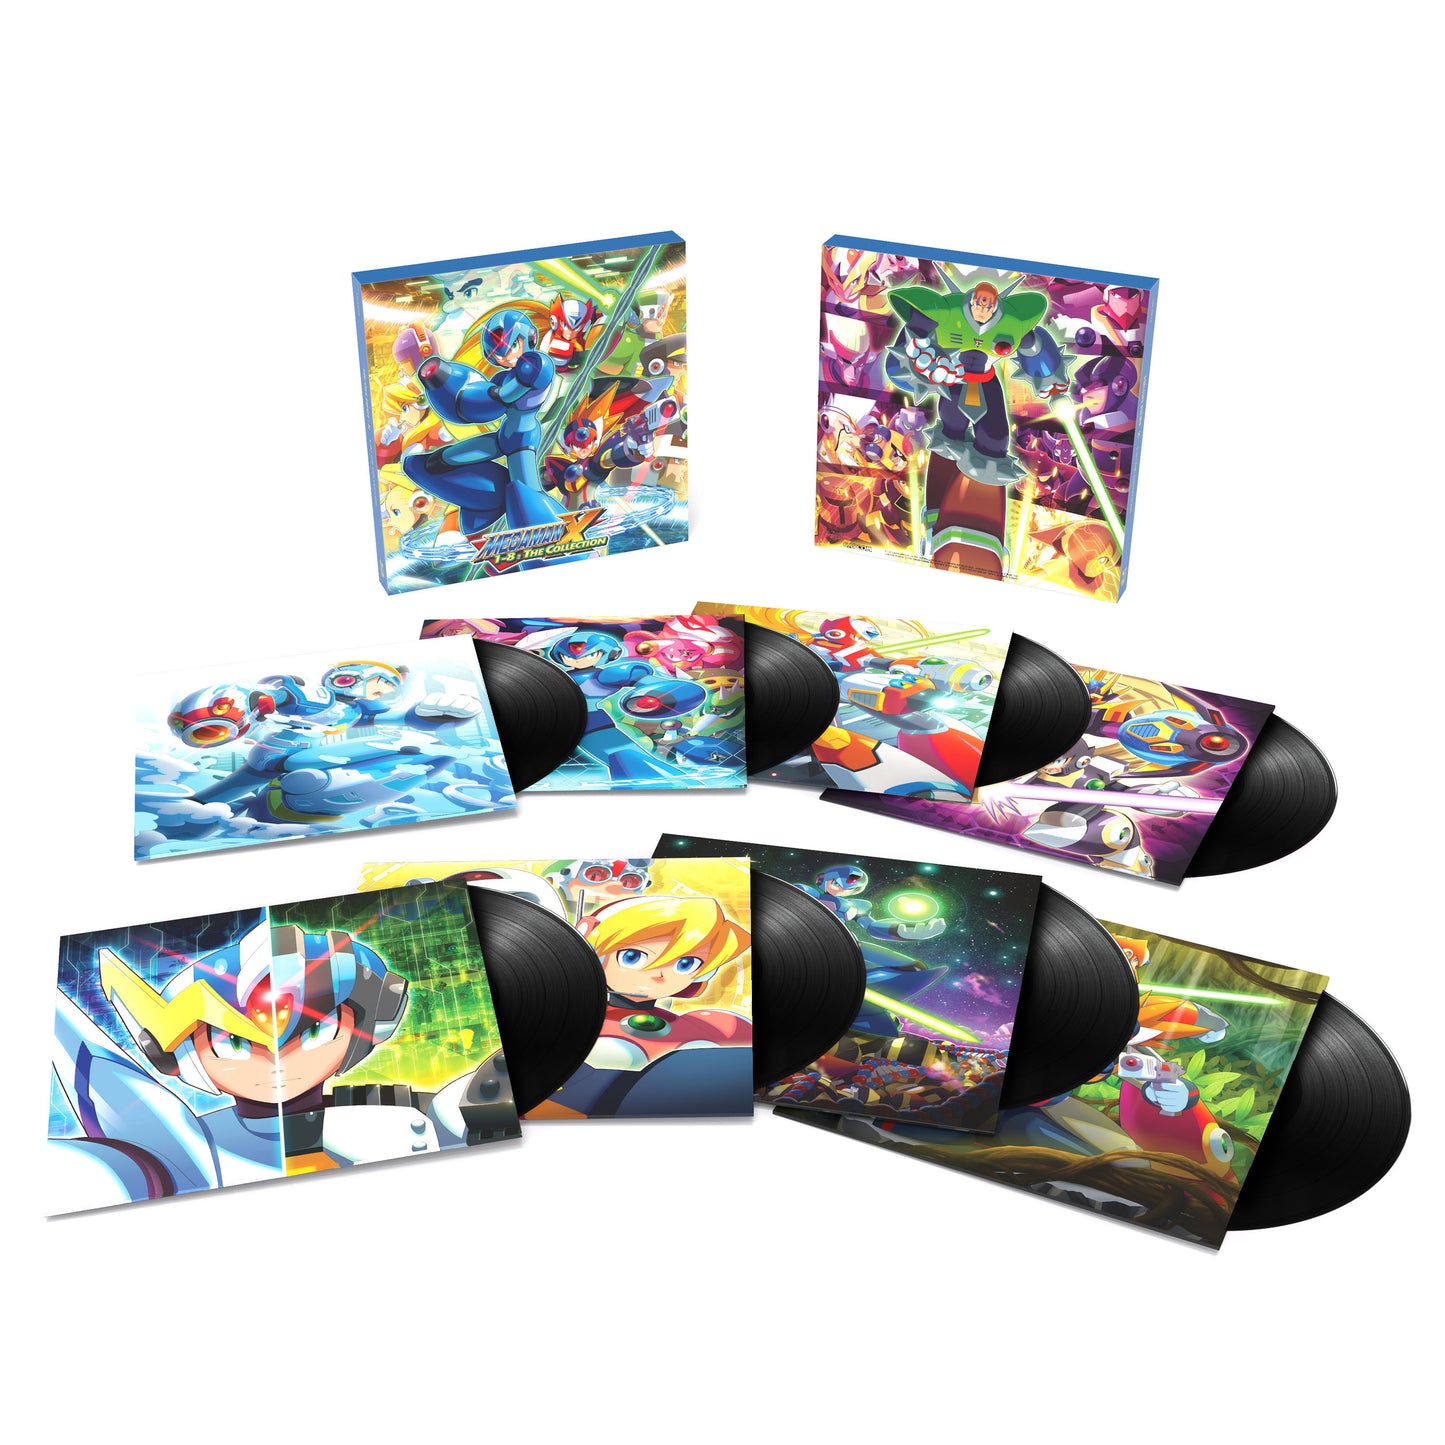 LMLP078 - Capcom Sound Team - Mega Man X 1-8: The Collection